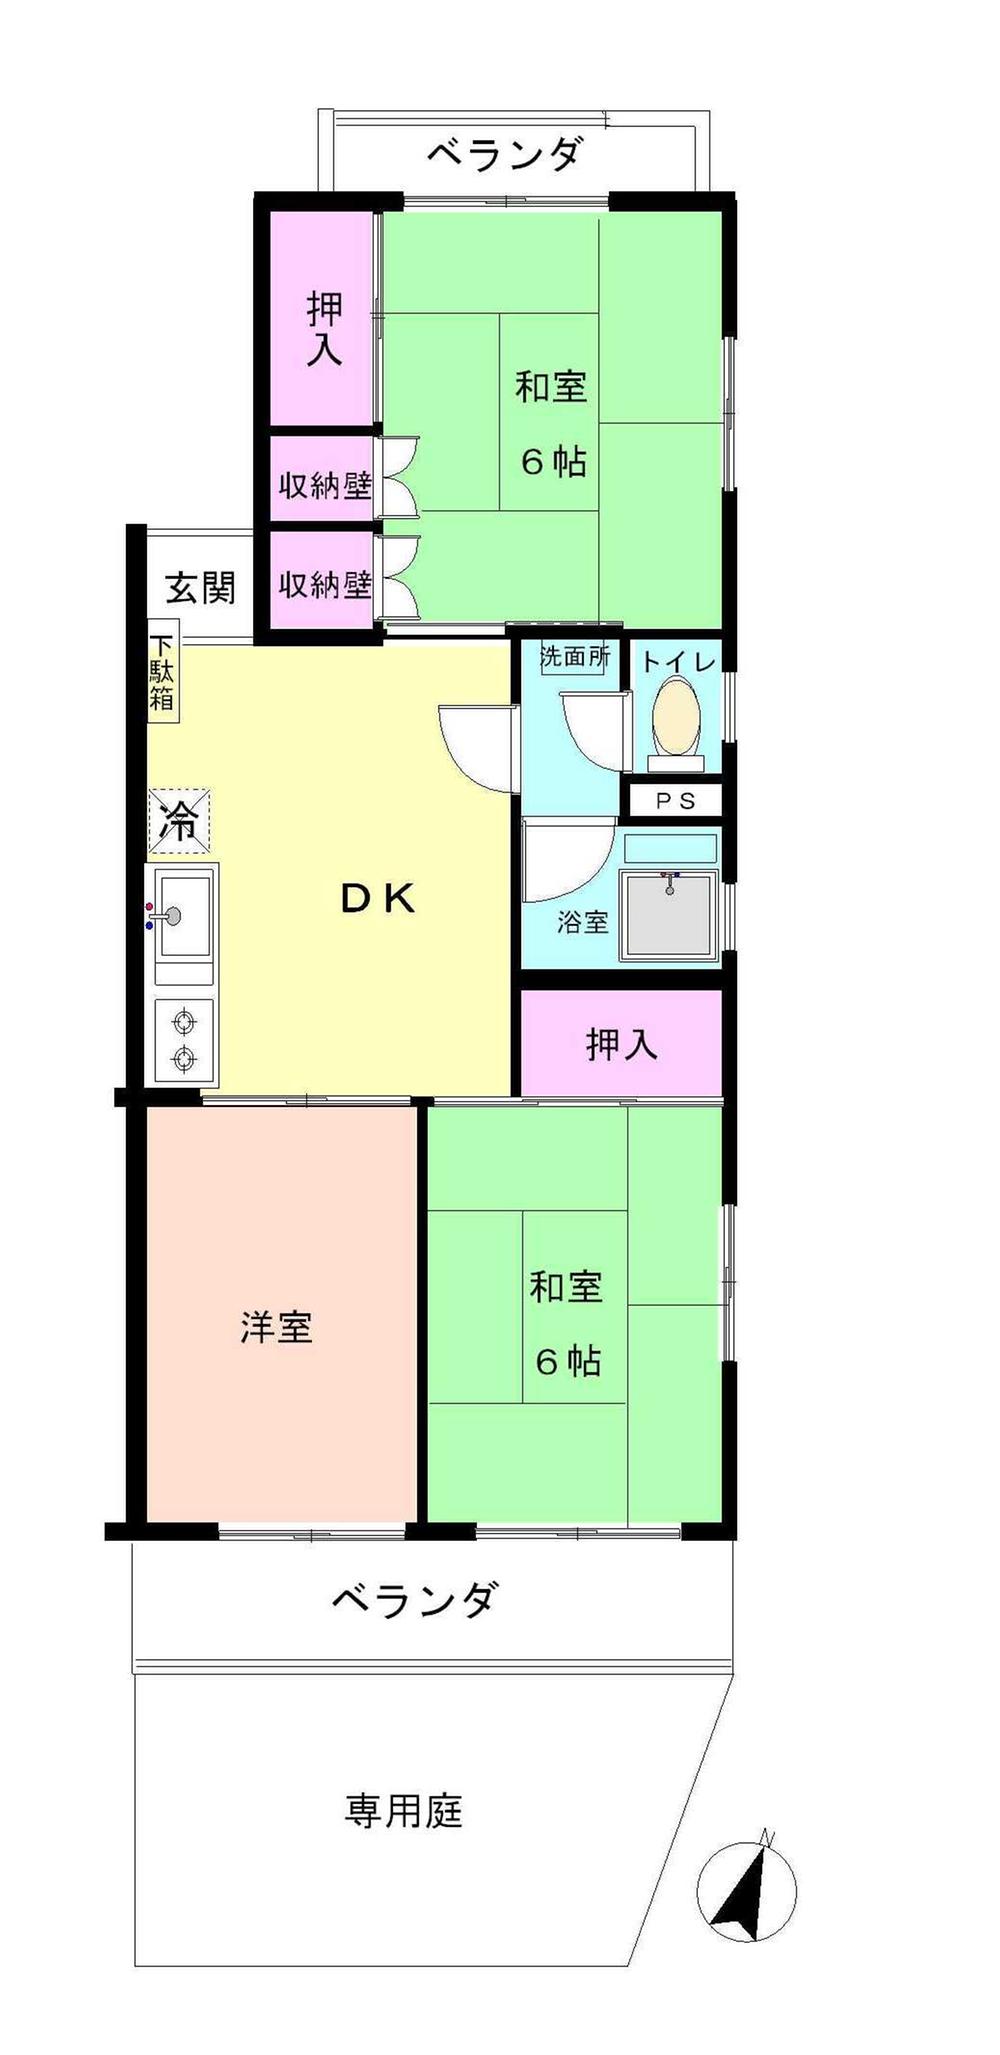 Floor plan. 3DK, Price 12 million yen, Occupied area 52.03 sq m , Balcony area 8.52 sq m 3DK